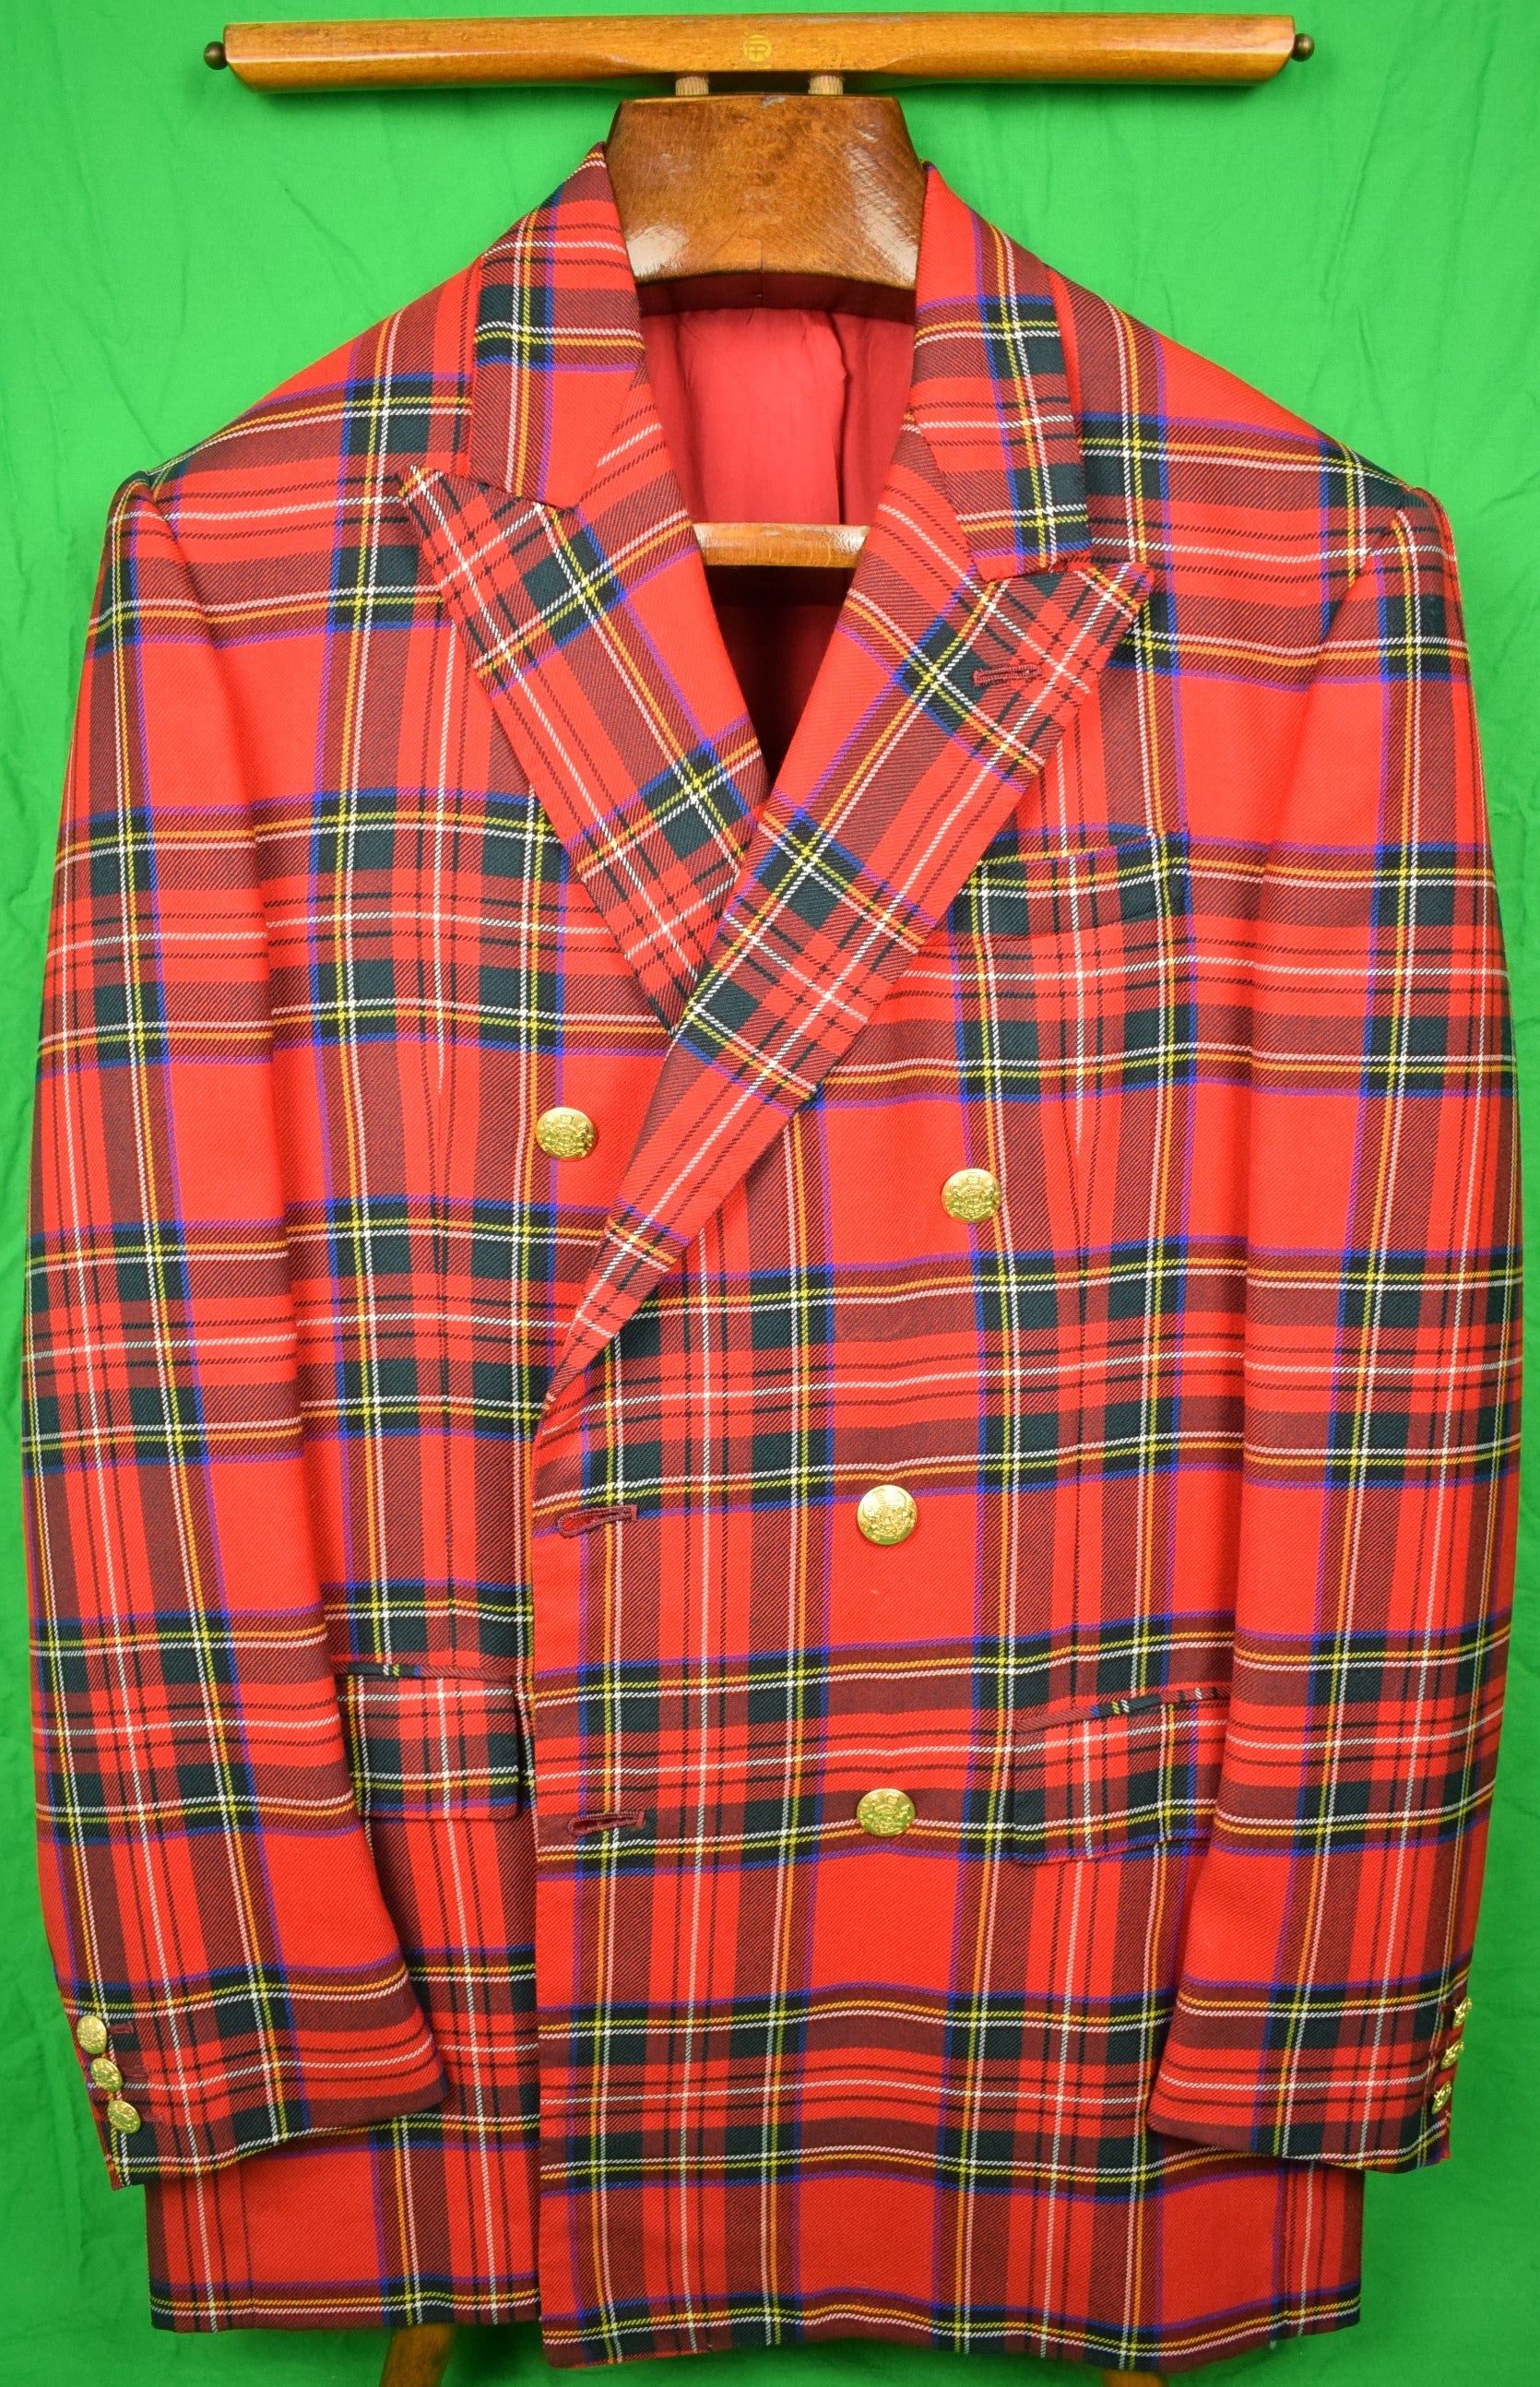 Royal Stewart Red Tartan Vest